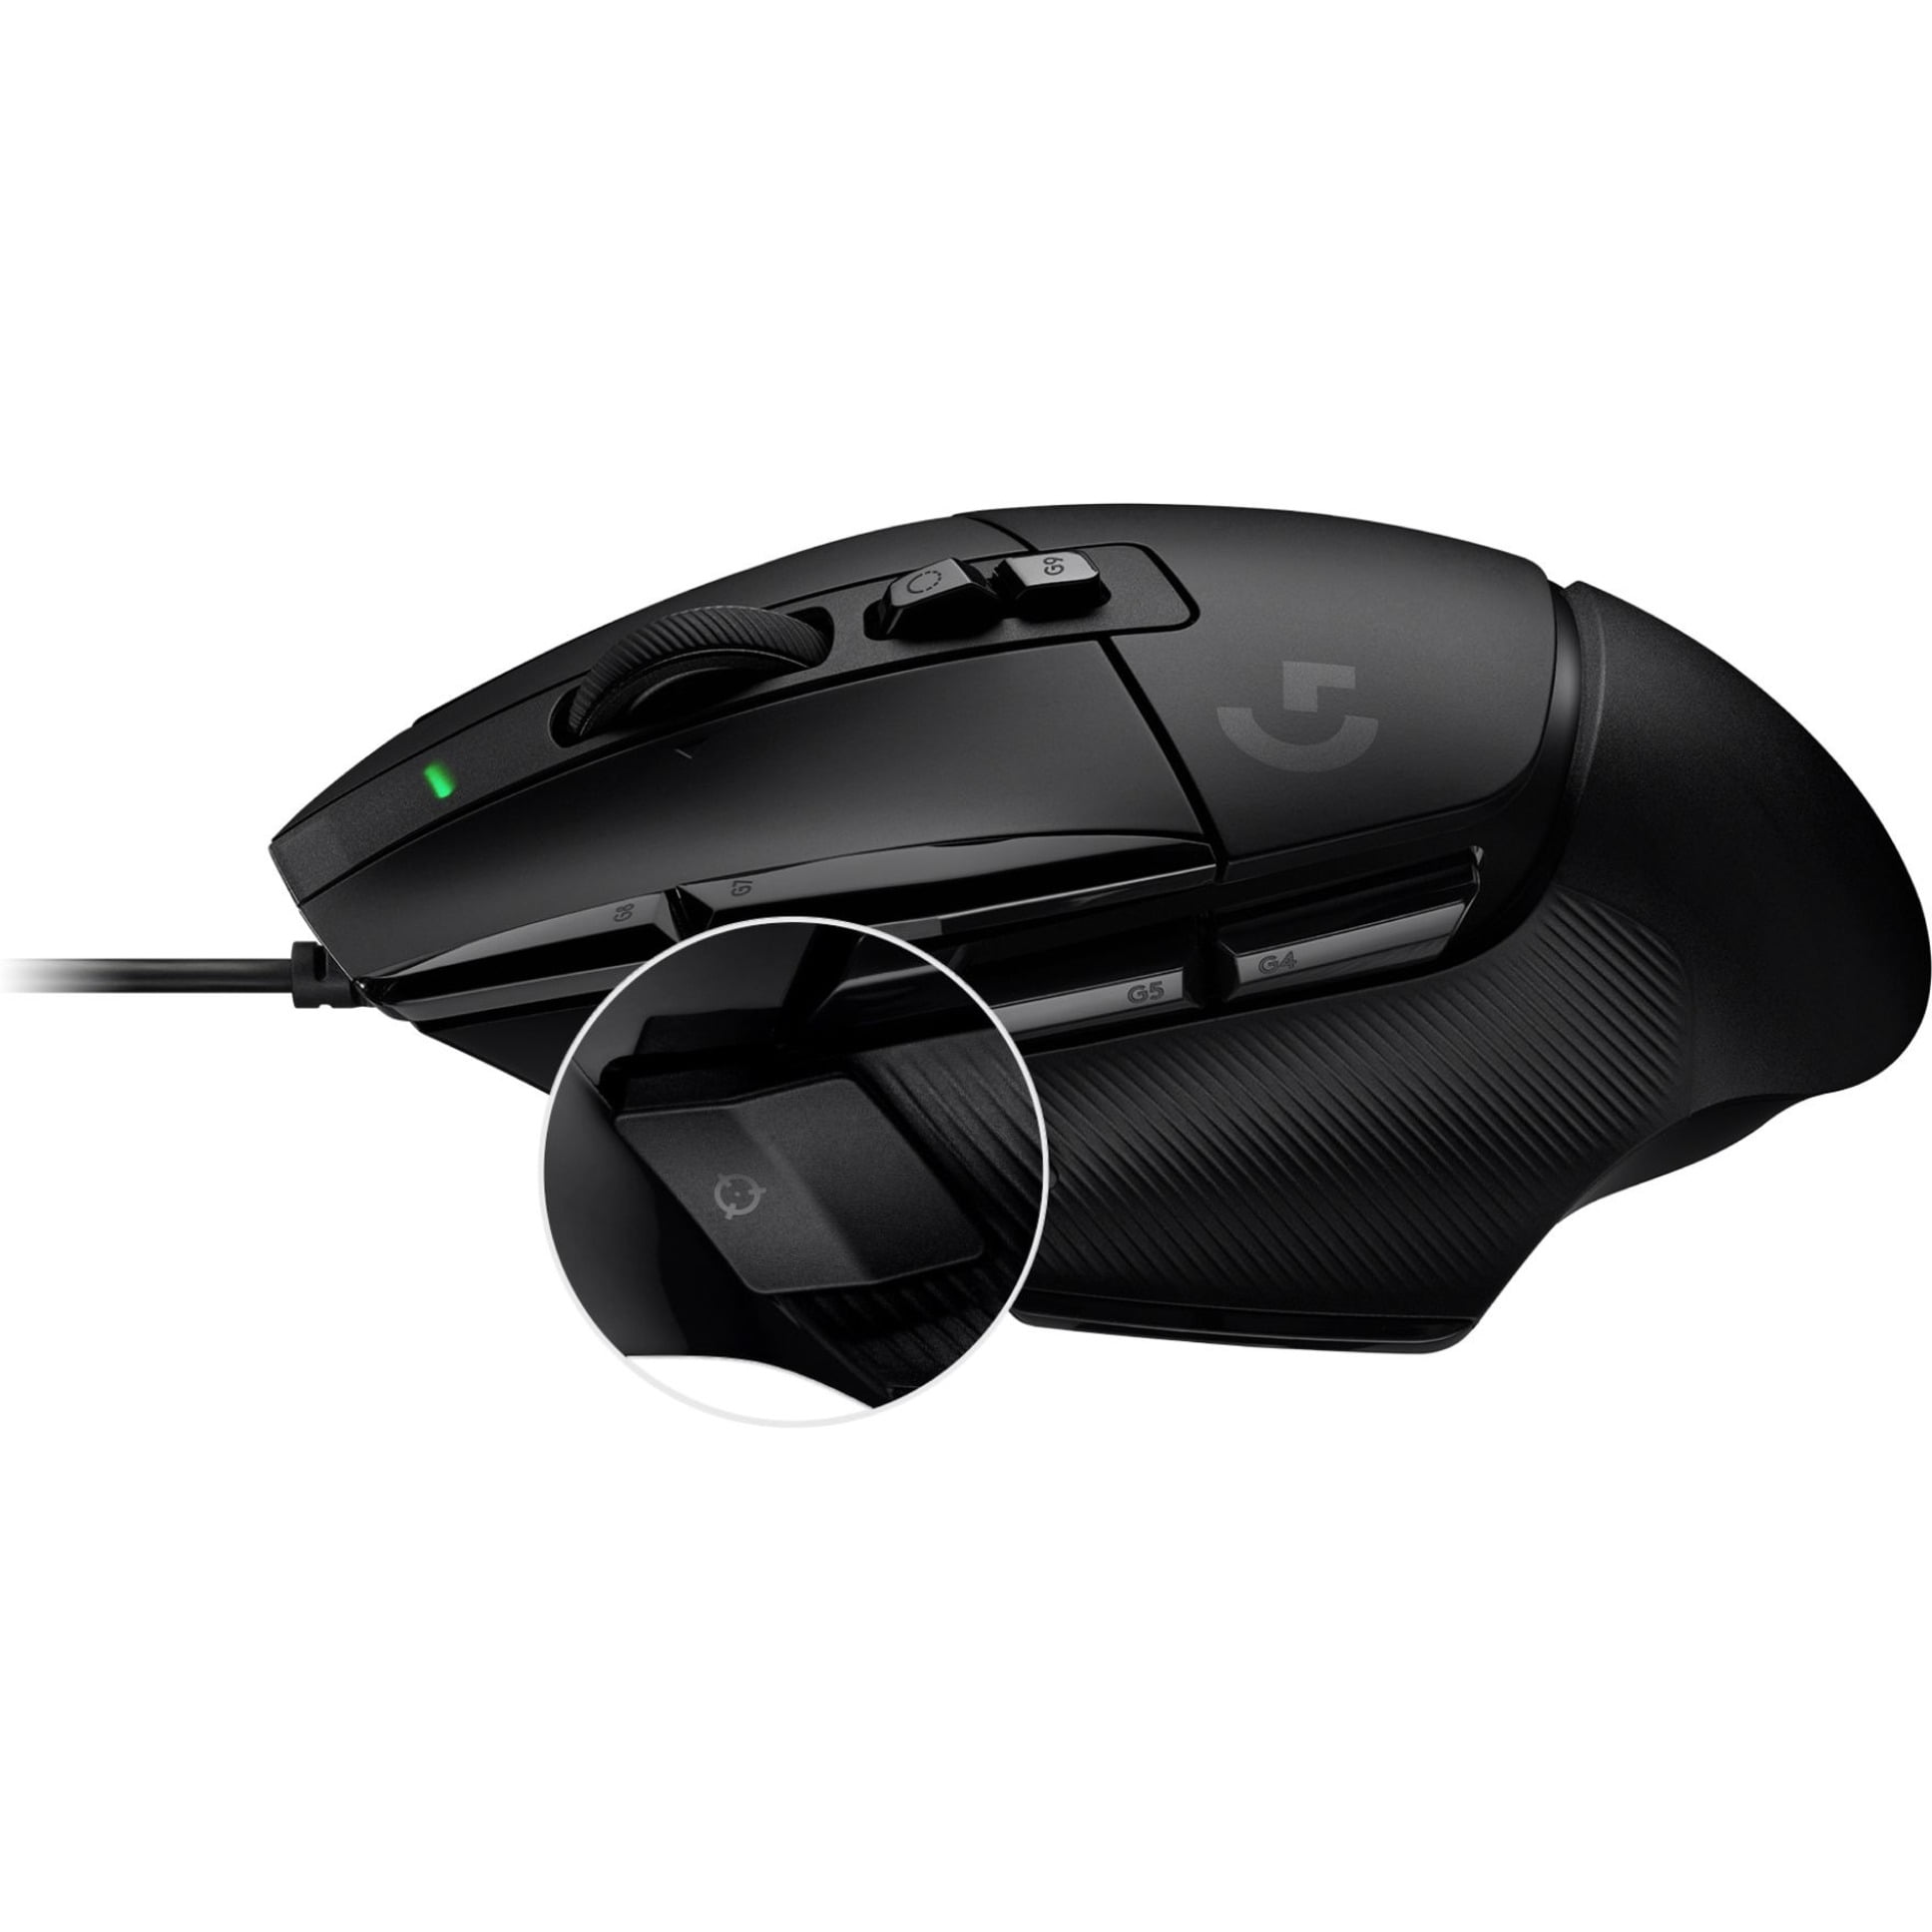 G502 X Gaming Mouse Walmart.com